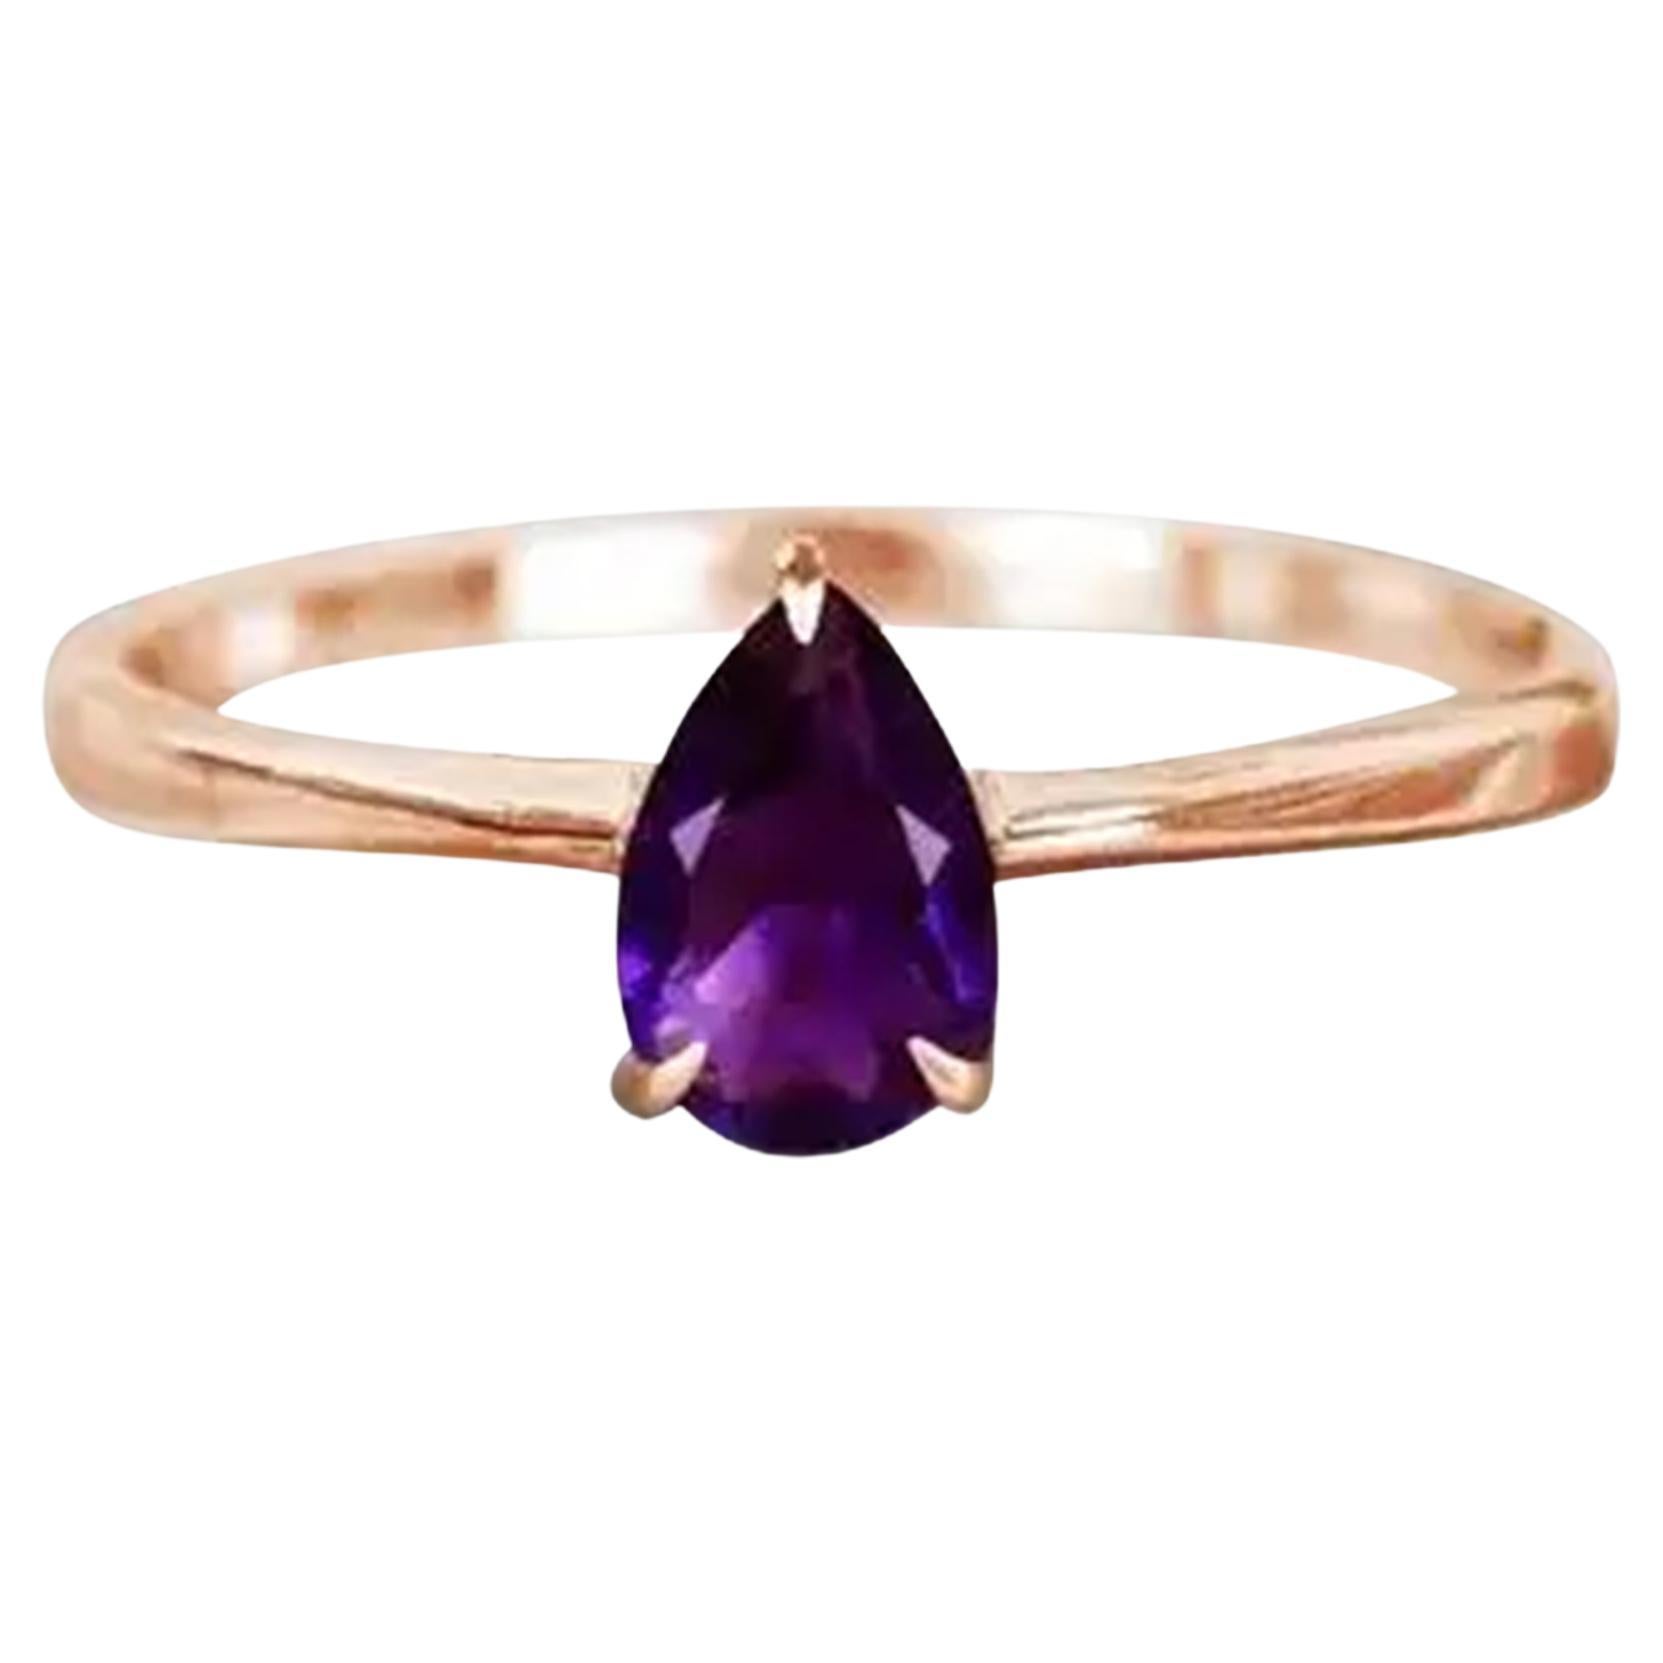 For Sale:  10k Gold Pear Gemstone 7x5 mm Pear Gemstone Ring Birthstone Ring Engagement Ring